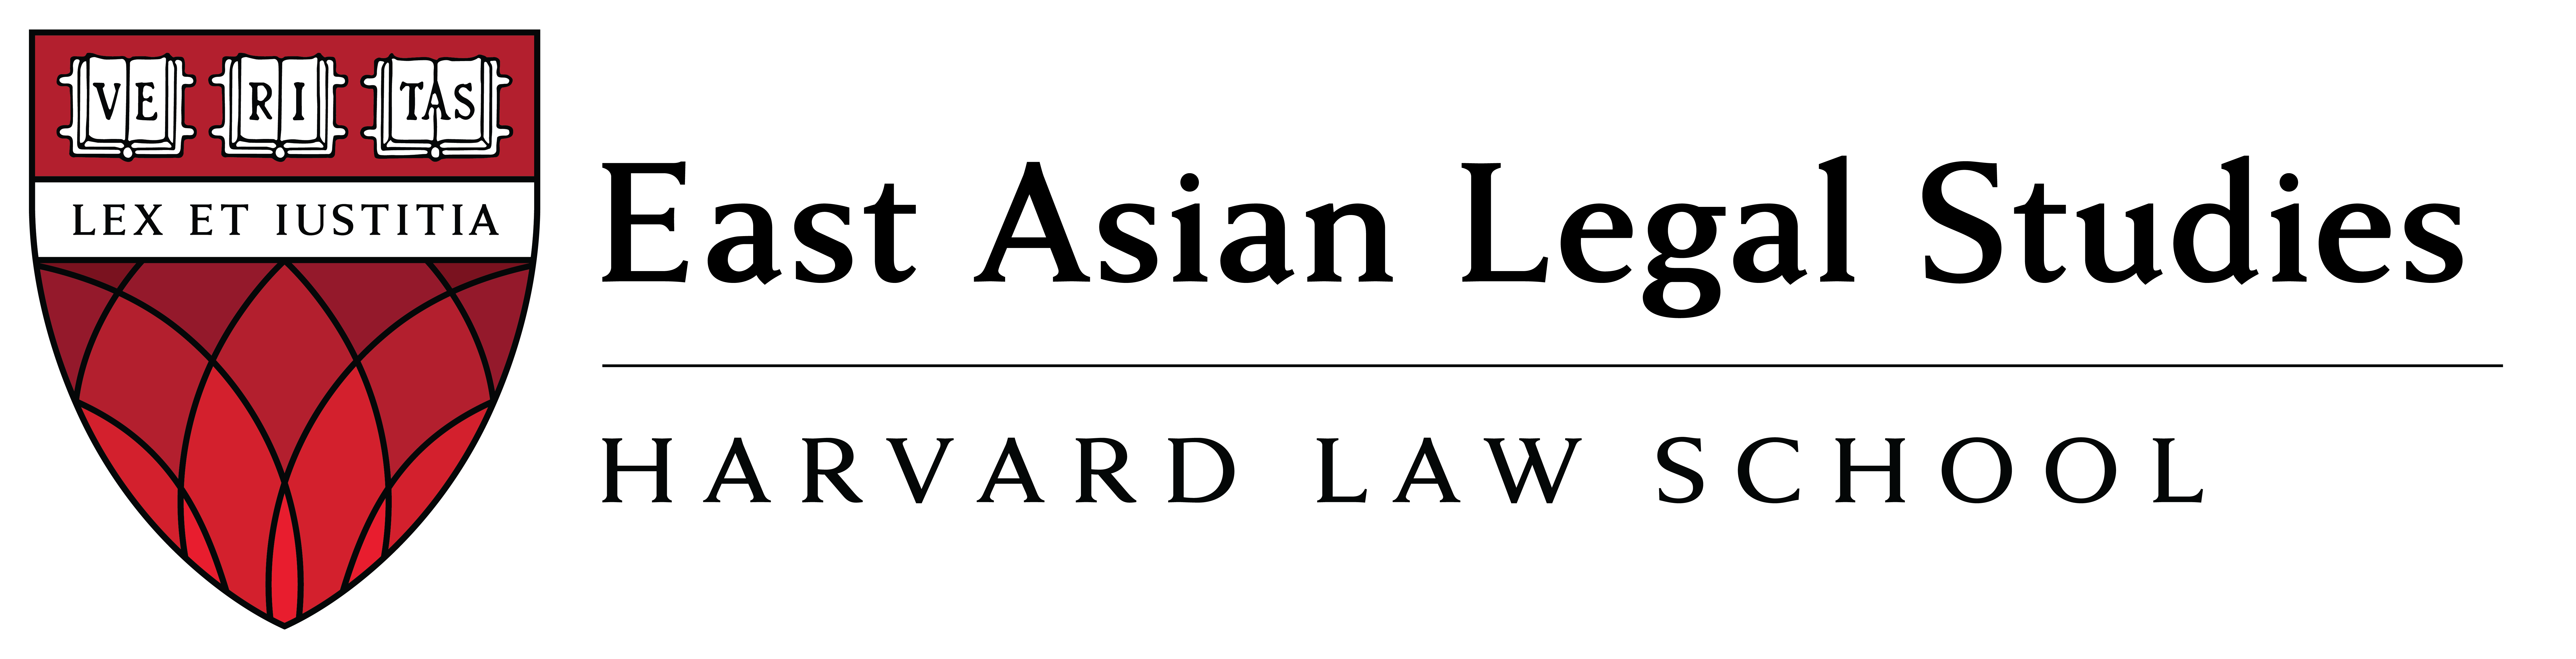 HLS shield, East Asian Legal Studies, Harvard Law School